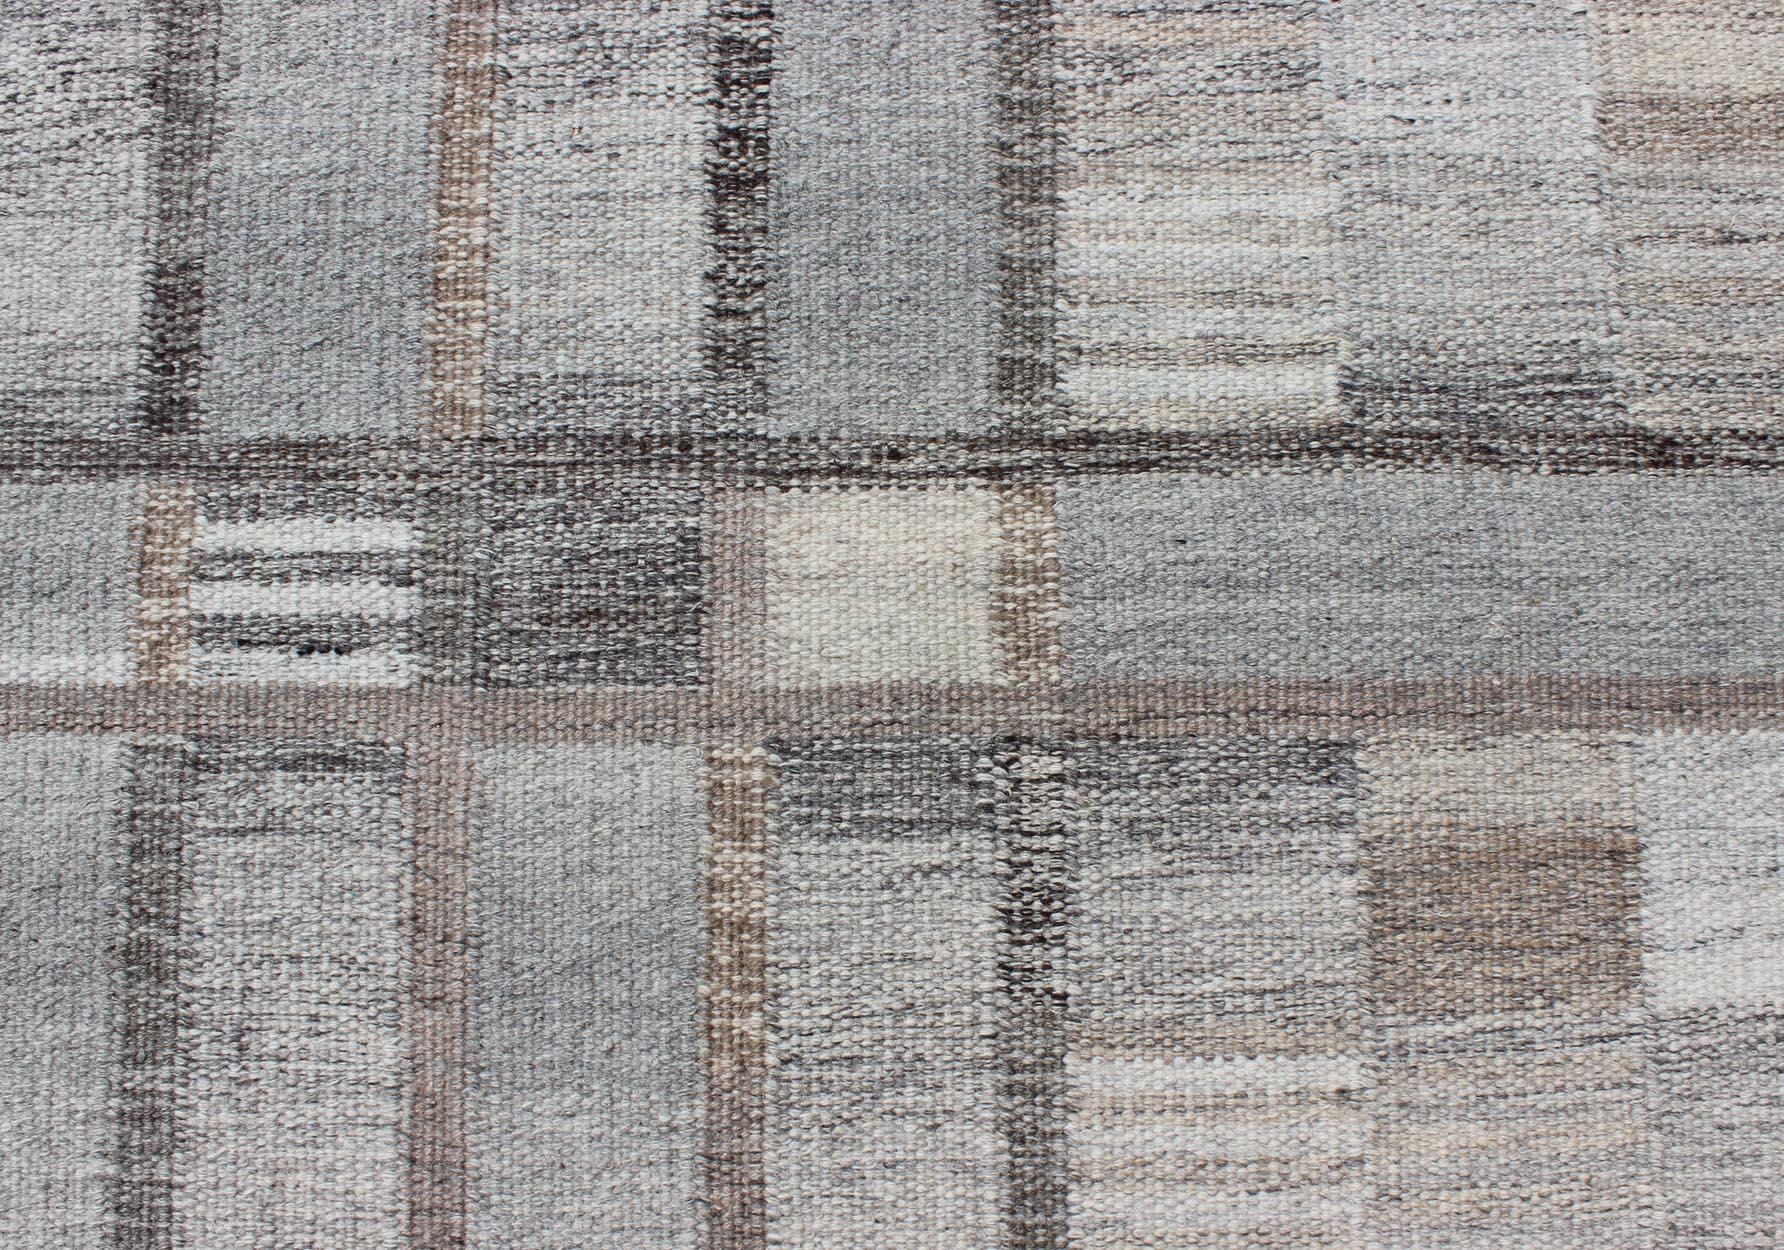 Geometric Stripe Block Modern Scandinavian Flat-Weave Design Rug in Gray Tones In Excellent Condition For Sale In Atlanta, GA